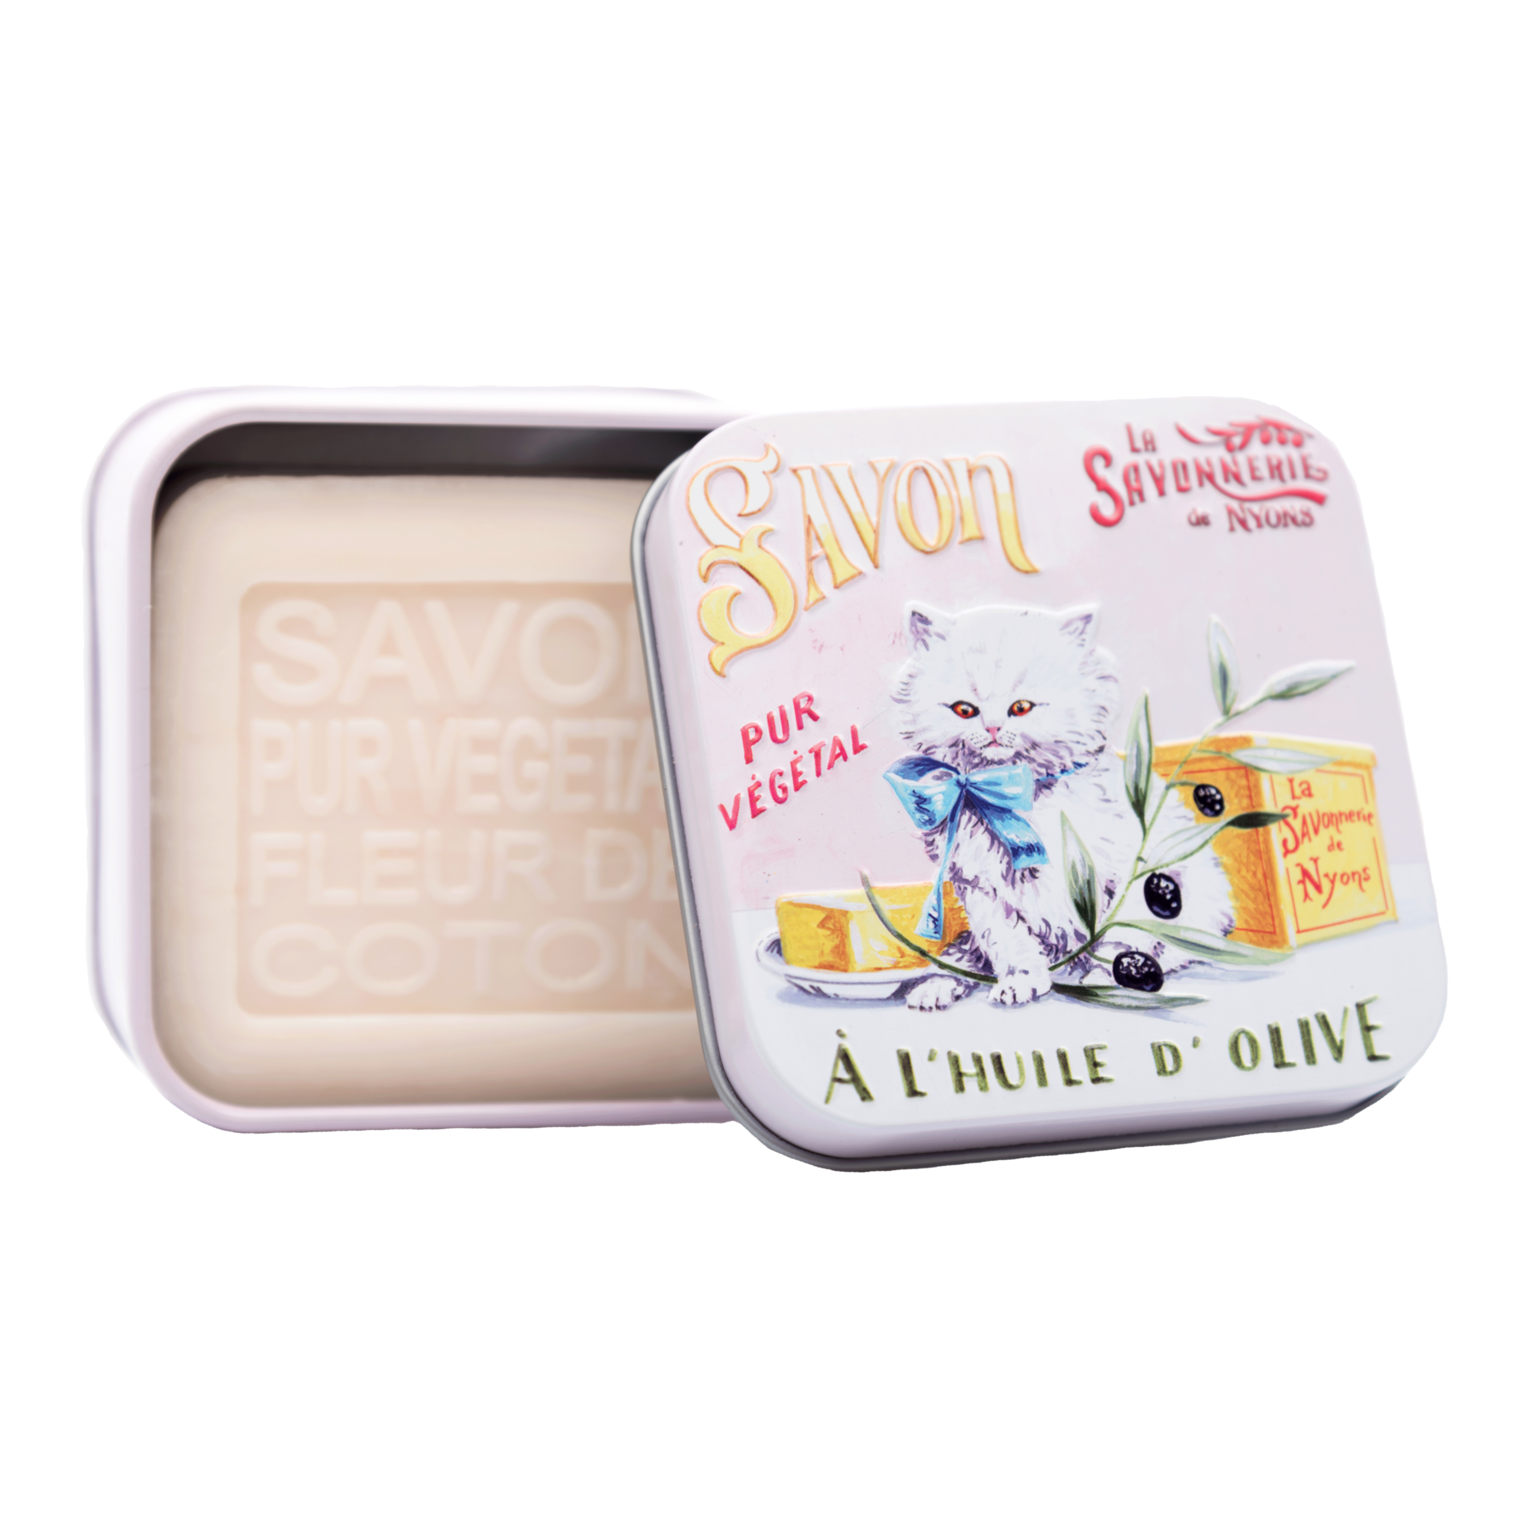 La Savonnerie de Nyons 100g Soap in Tin Box - Cats (Set of 2)